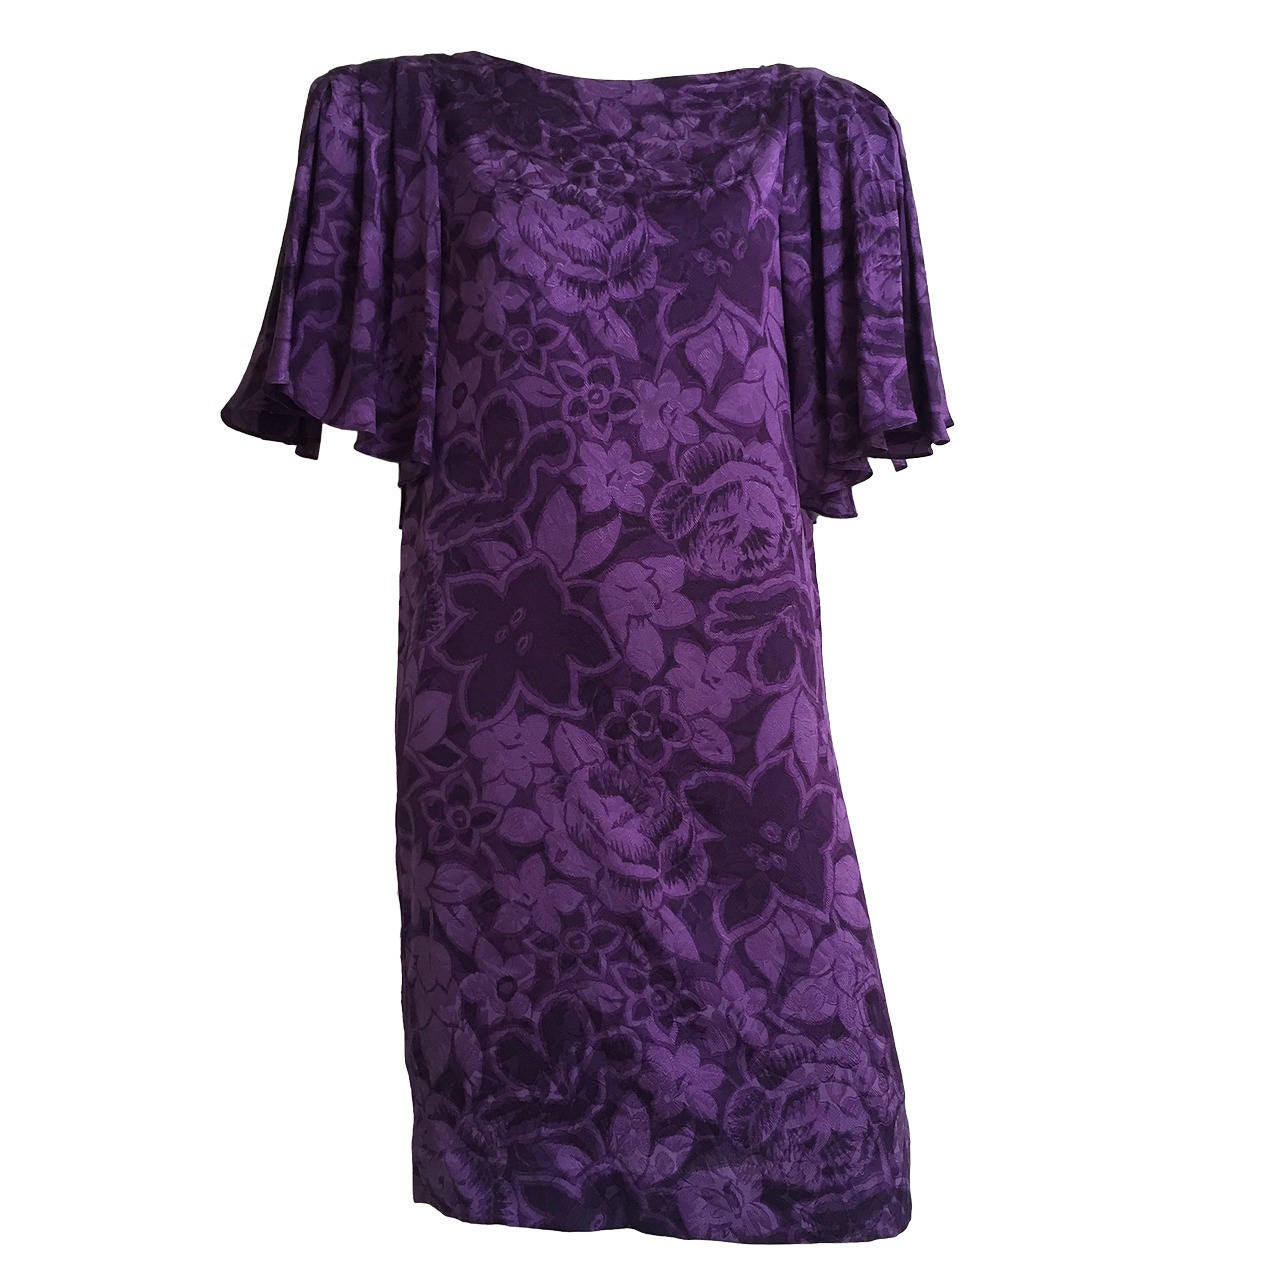 Hanae Mori for Neiman Marcus 80s floral silk dress size 8. For Sale